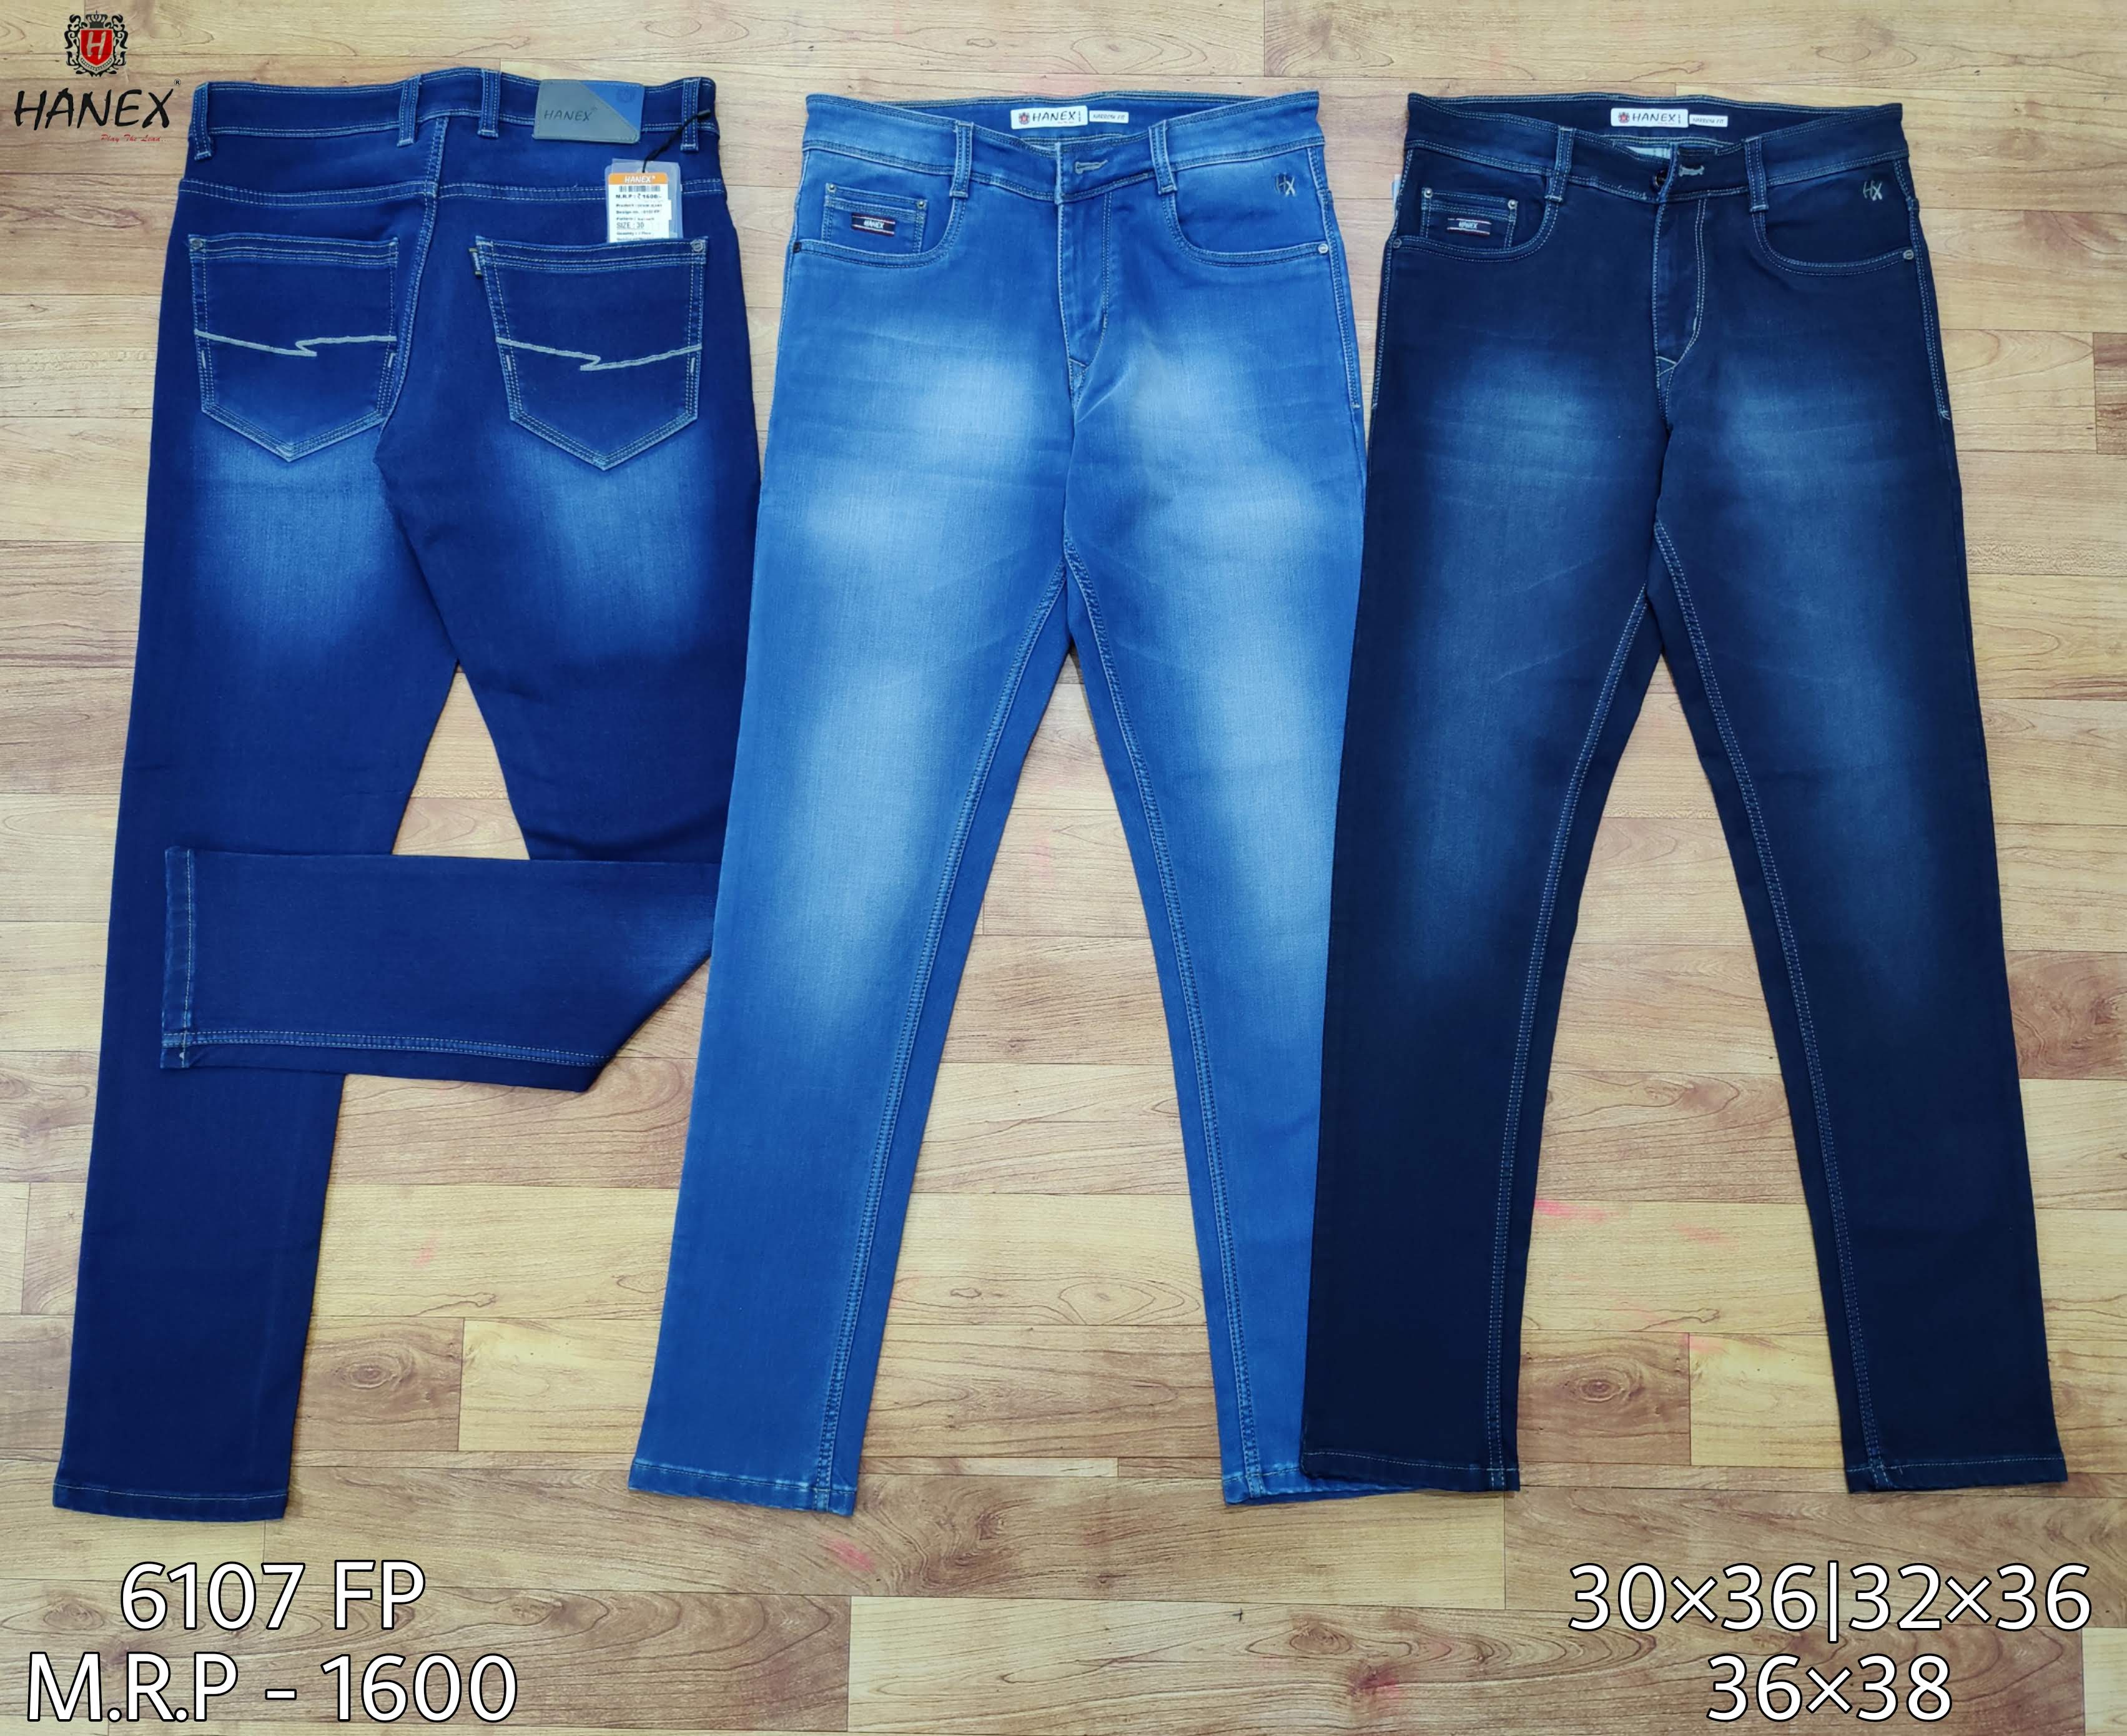 Hanex Faded Denim Jeans